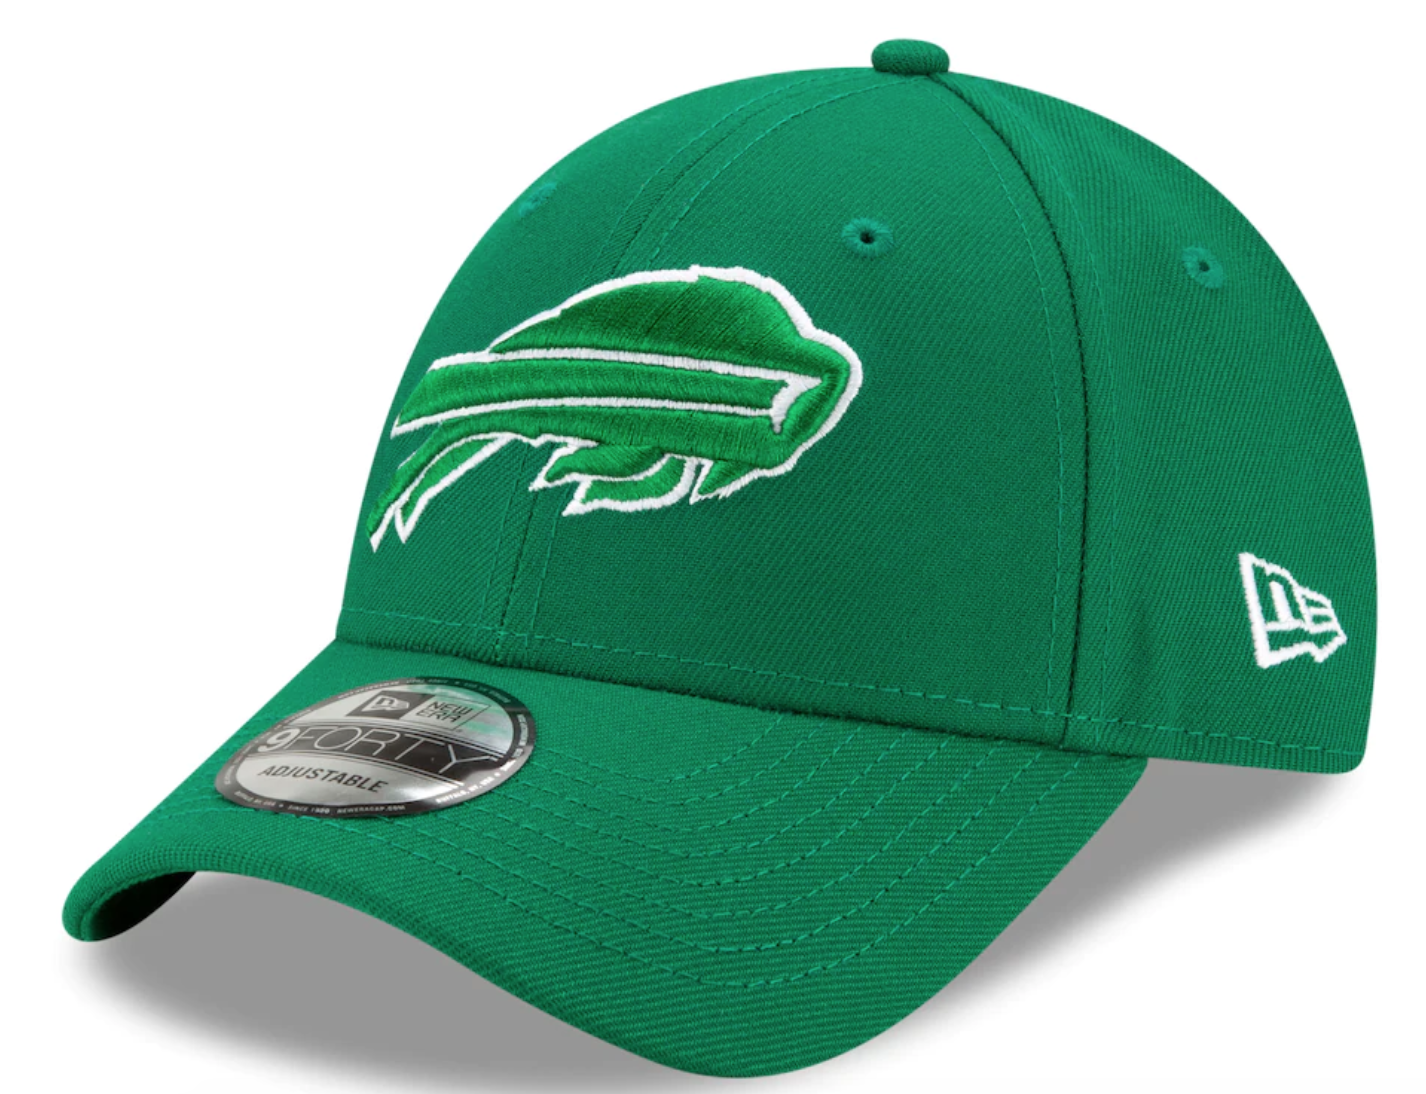 Buffalo Bills St. Patrick's Day gear: Where to buy green hats, T